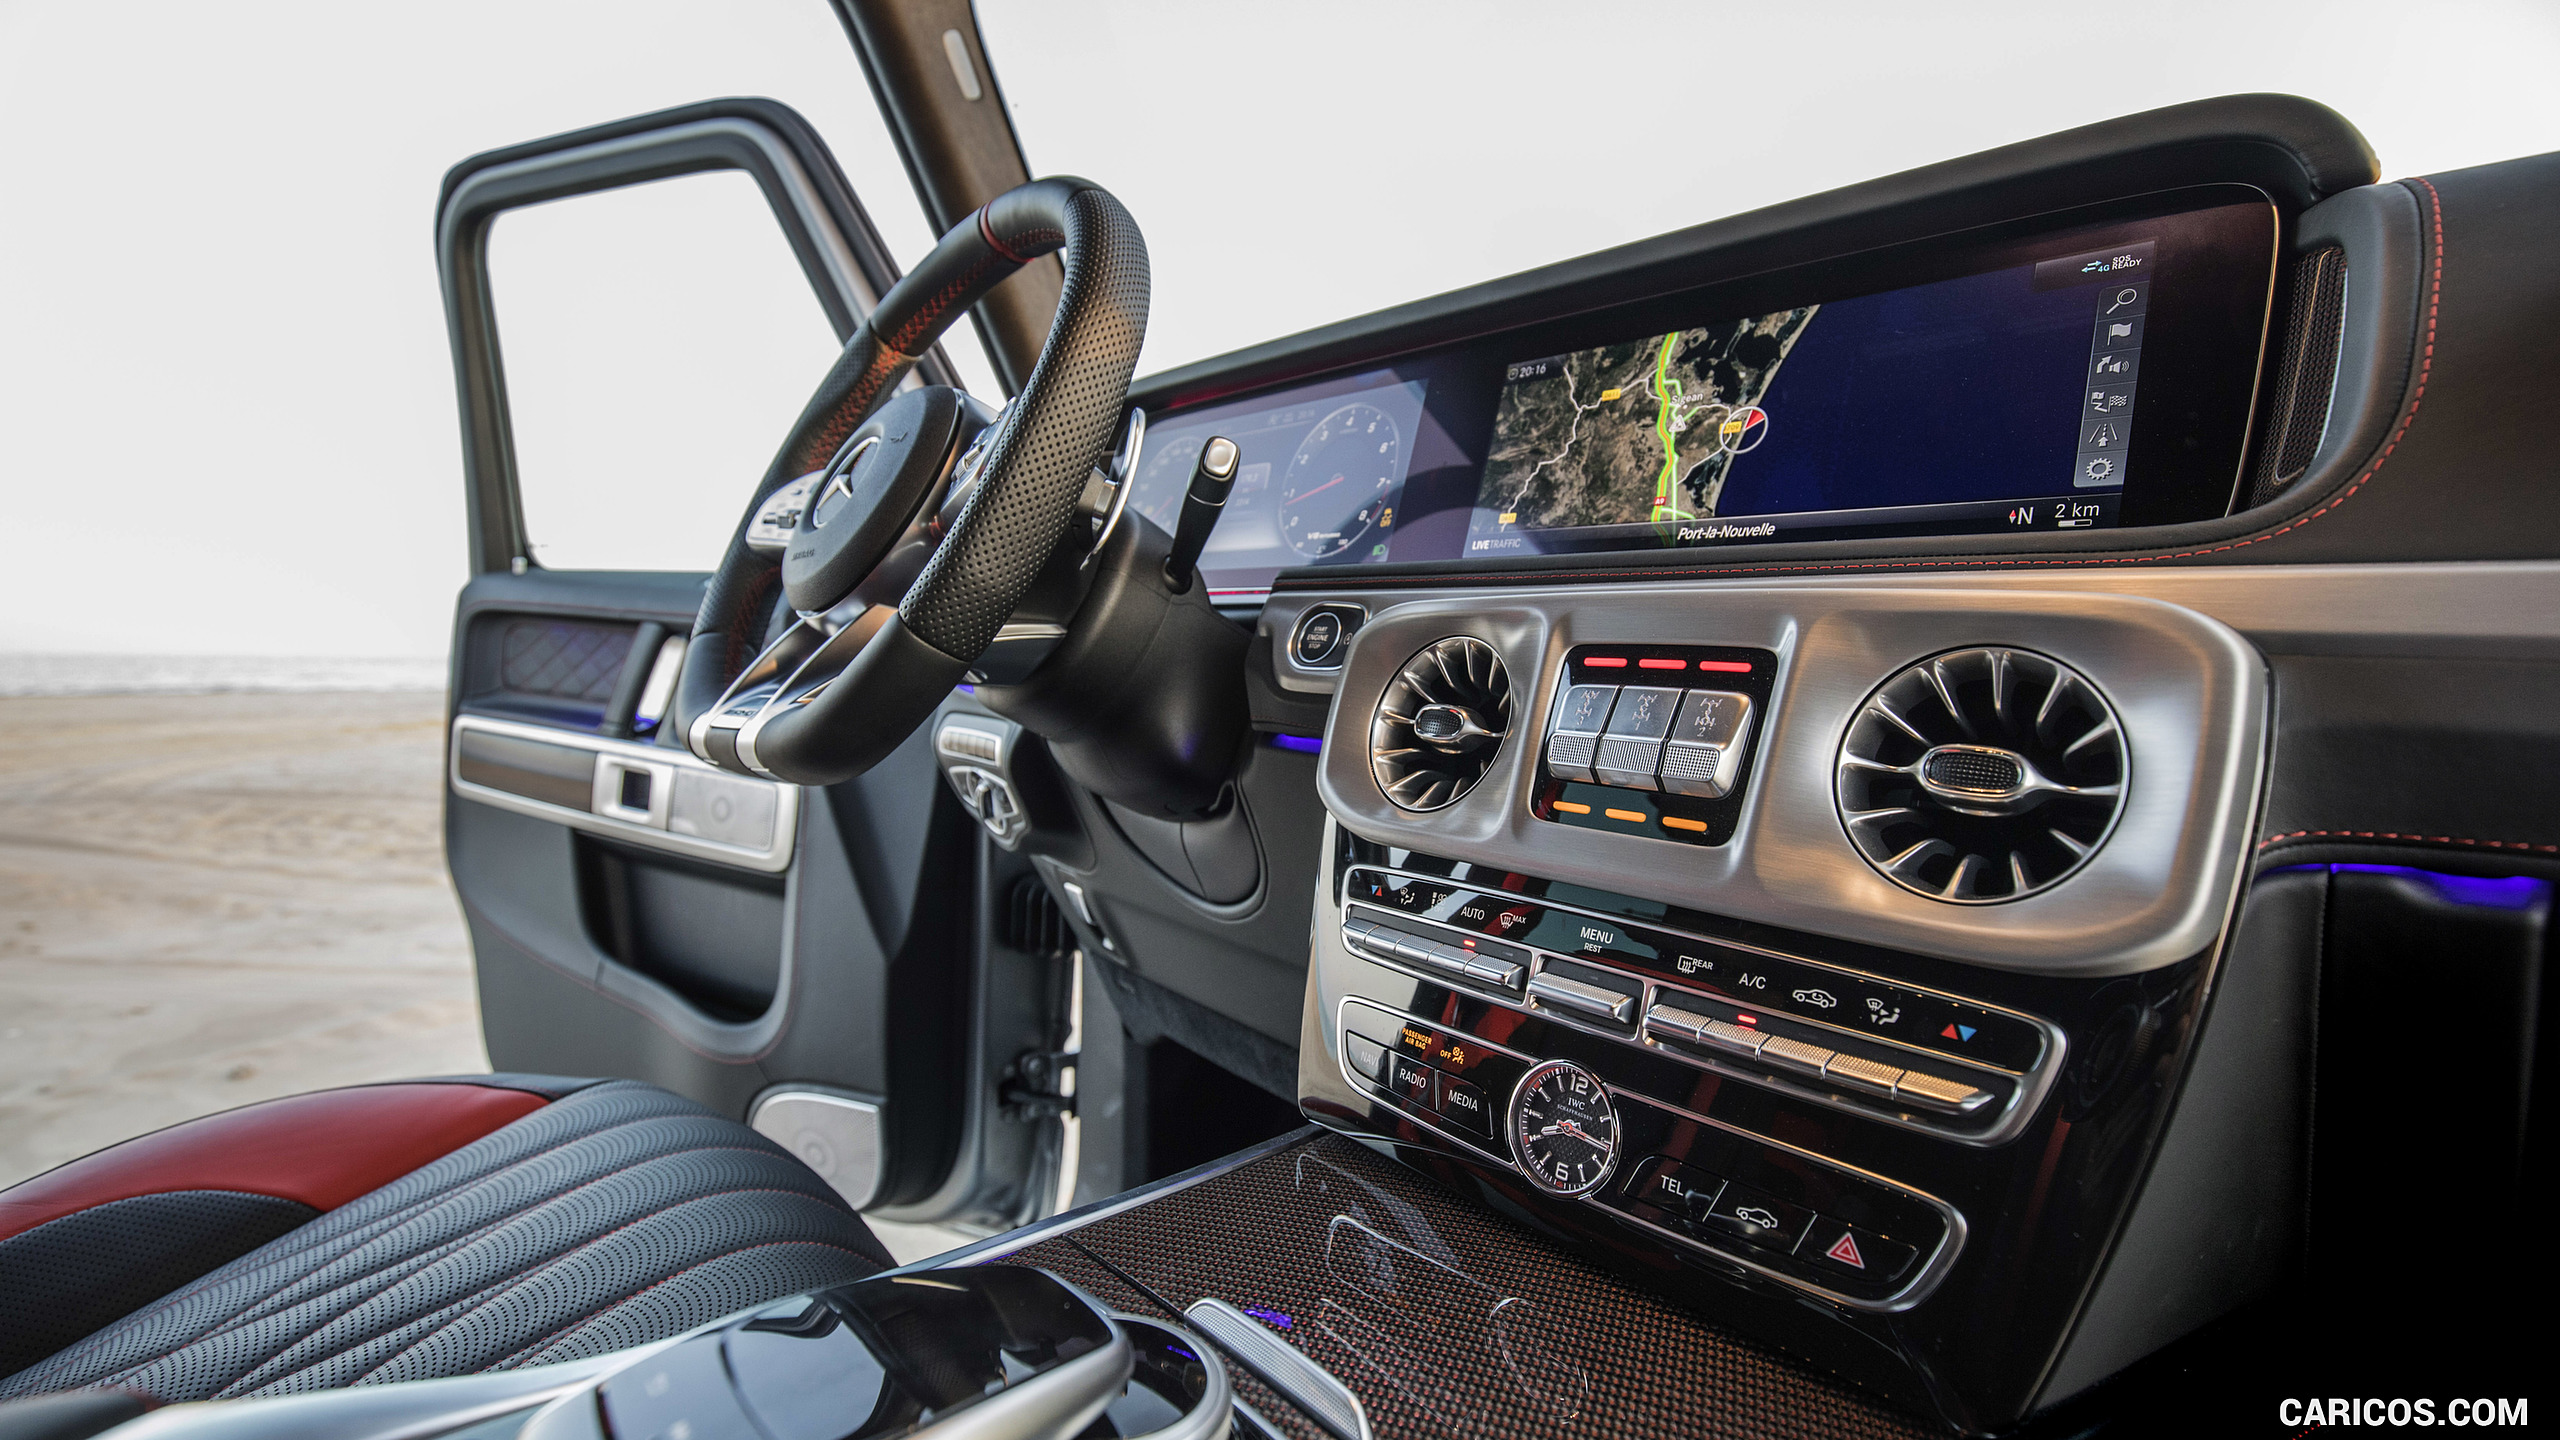 2019 Mercedes-AMG G63 - Interior, #193 of 452